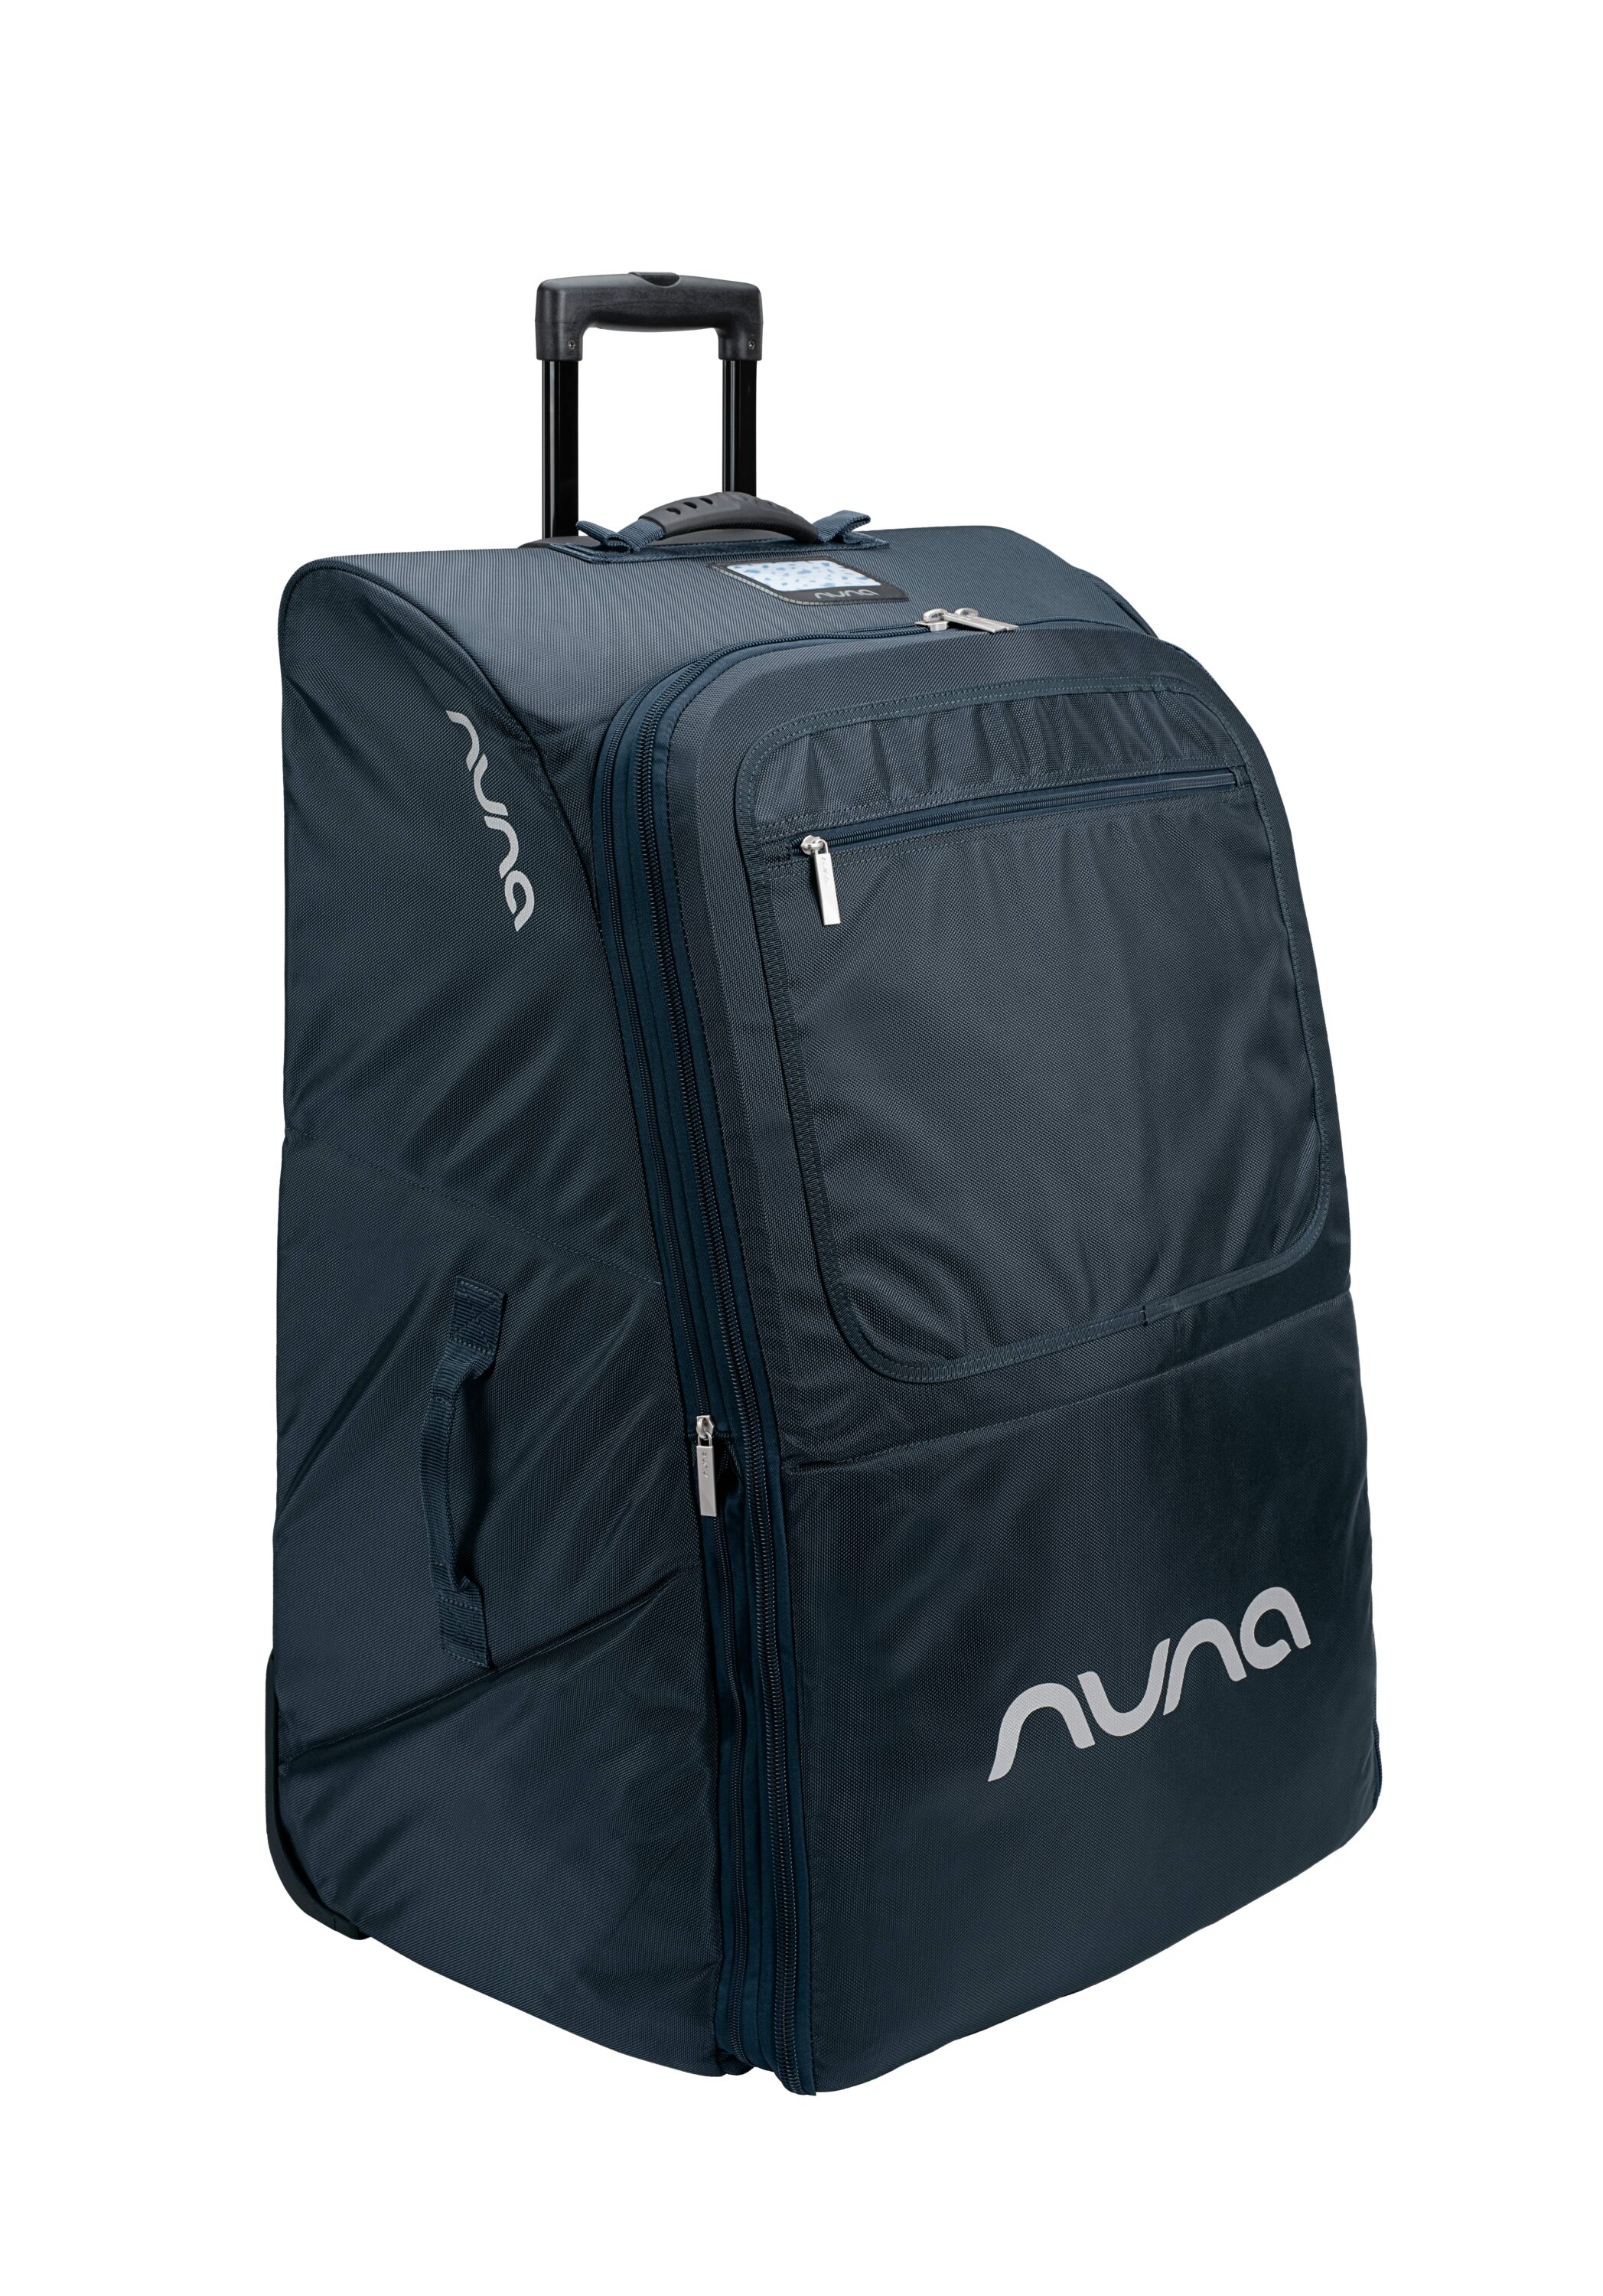 nuna travel bag warranty